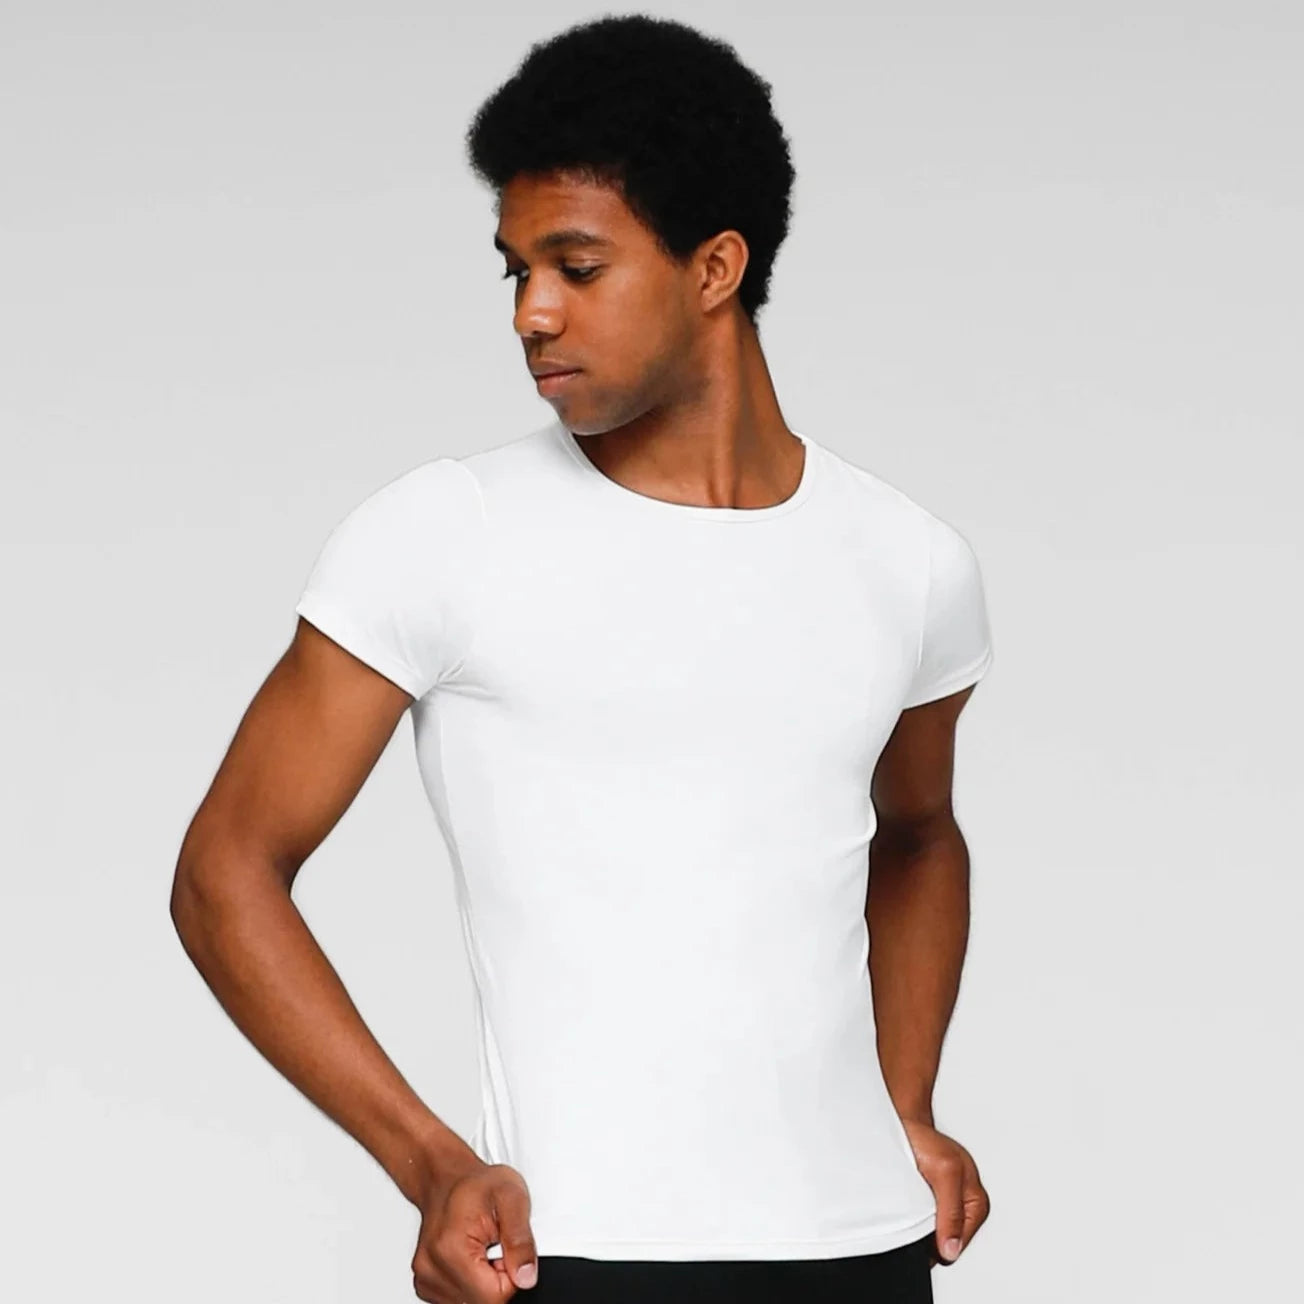 Men's Fitted Short Sleeve Shirt